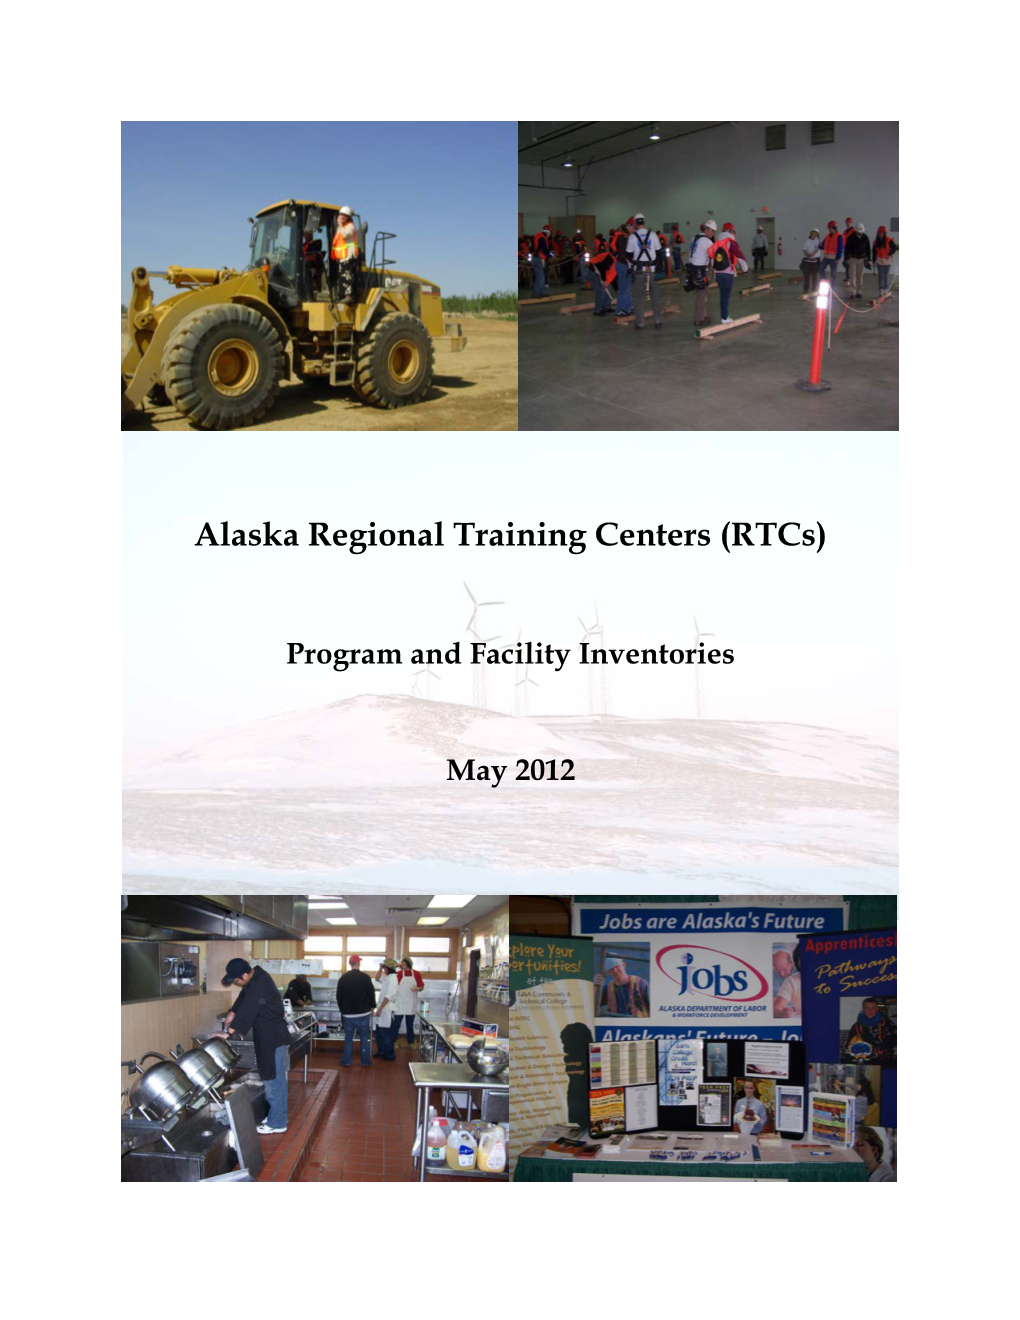 Alaska Regional Training Centers (Rtcs)